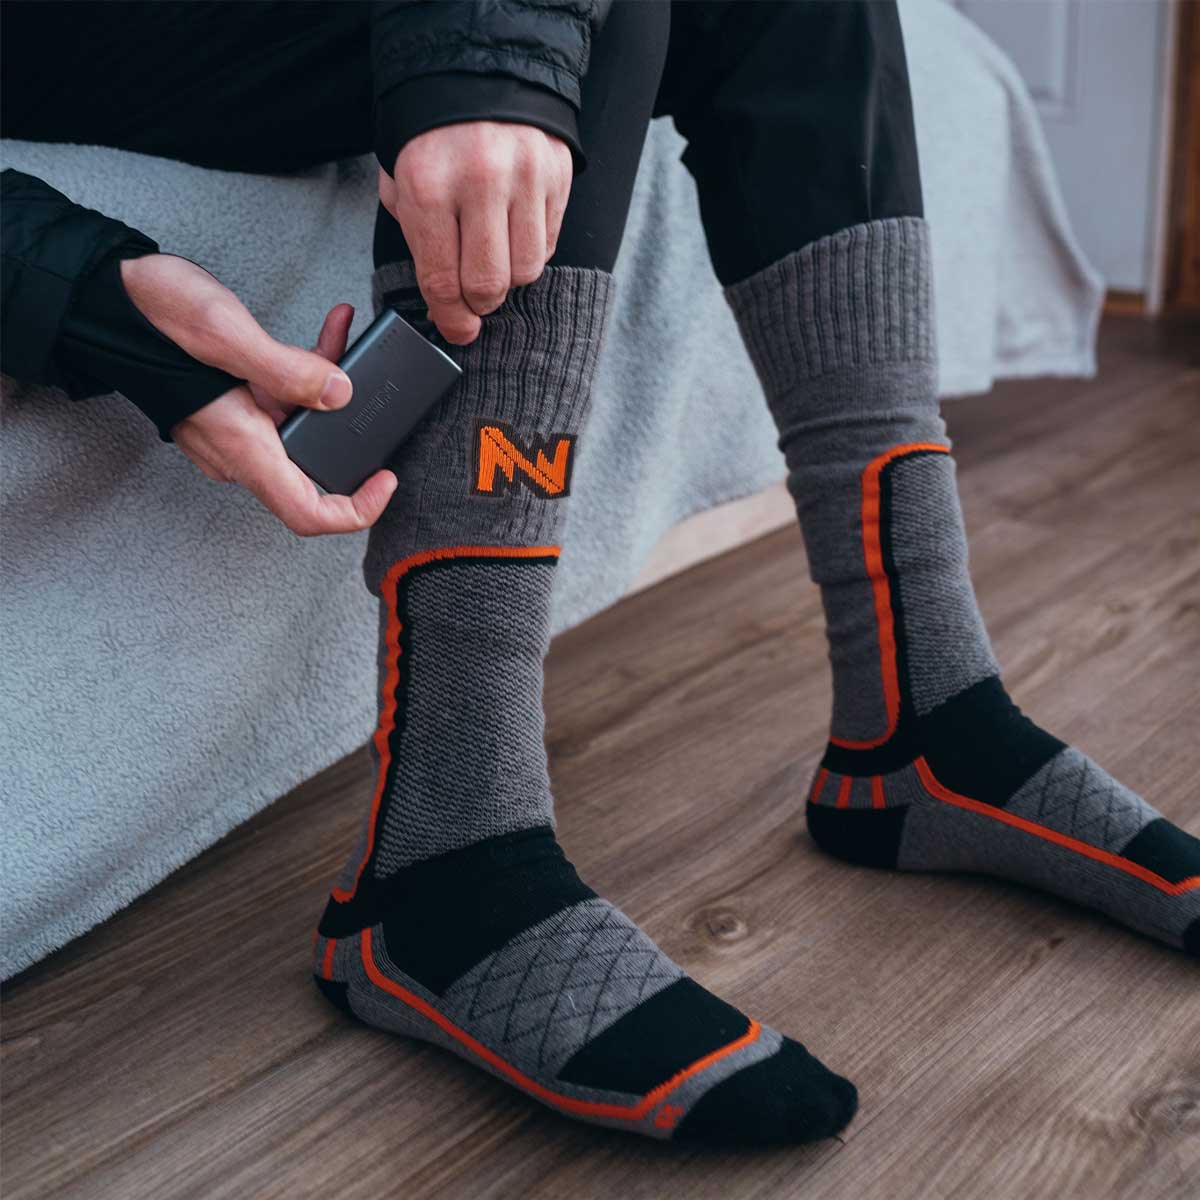 Heated Socks for Powersports